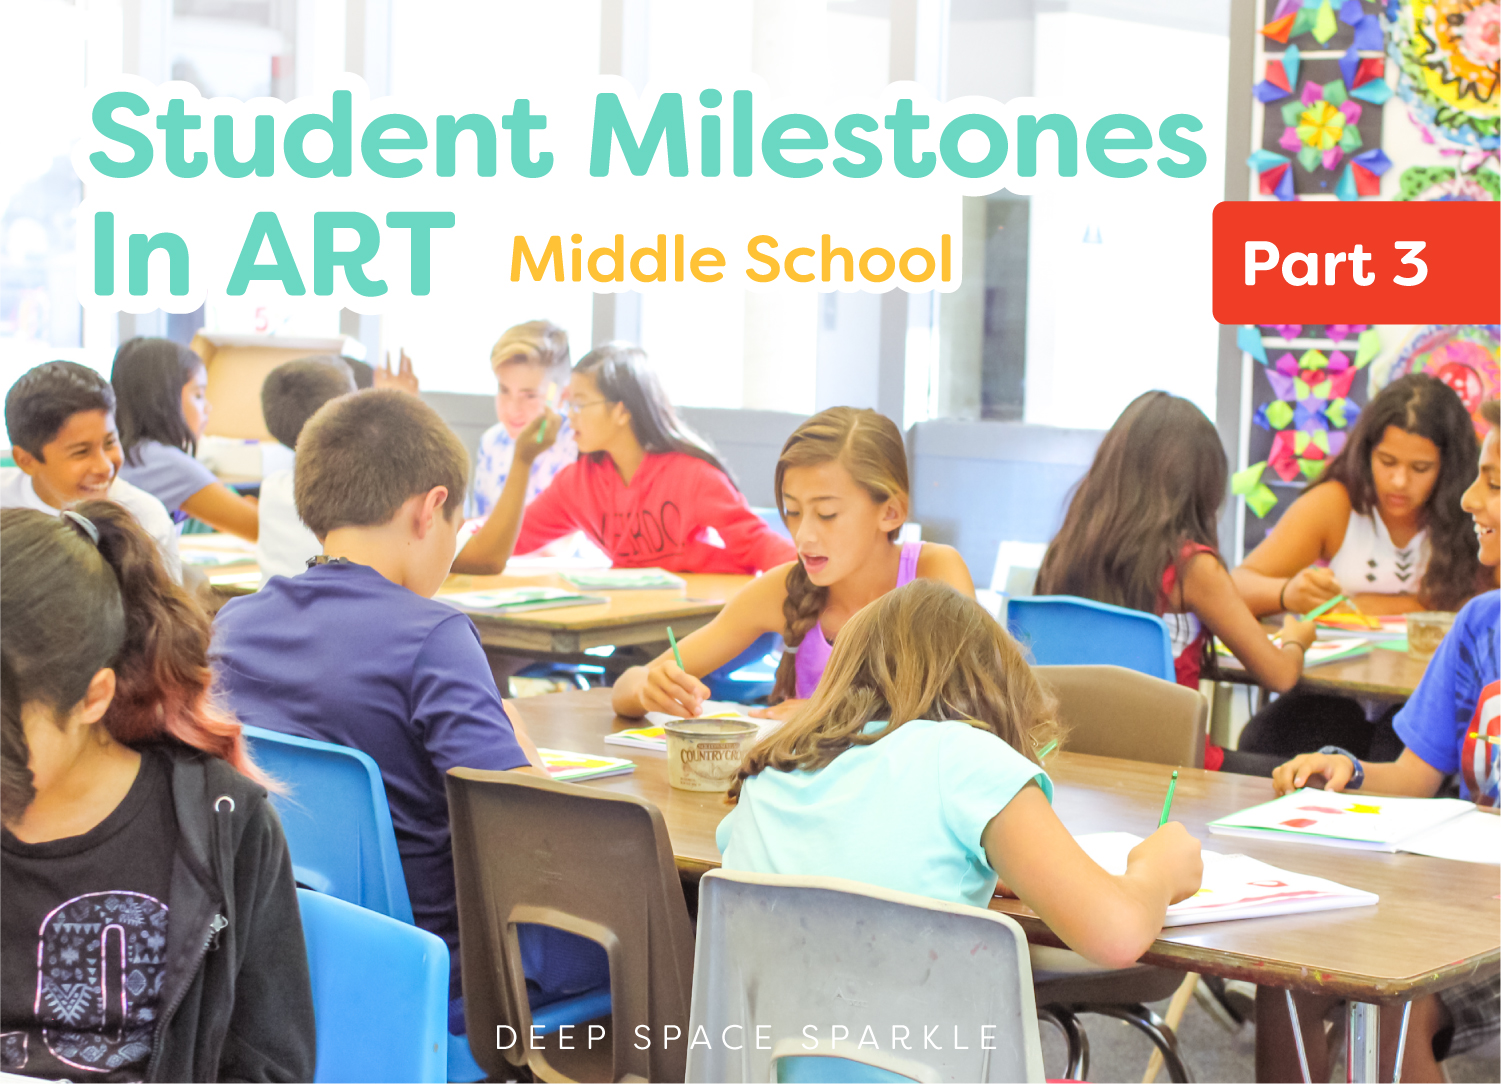 Middle School Student Milestones In Art